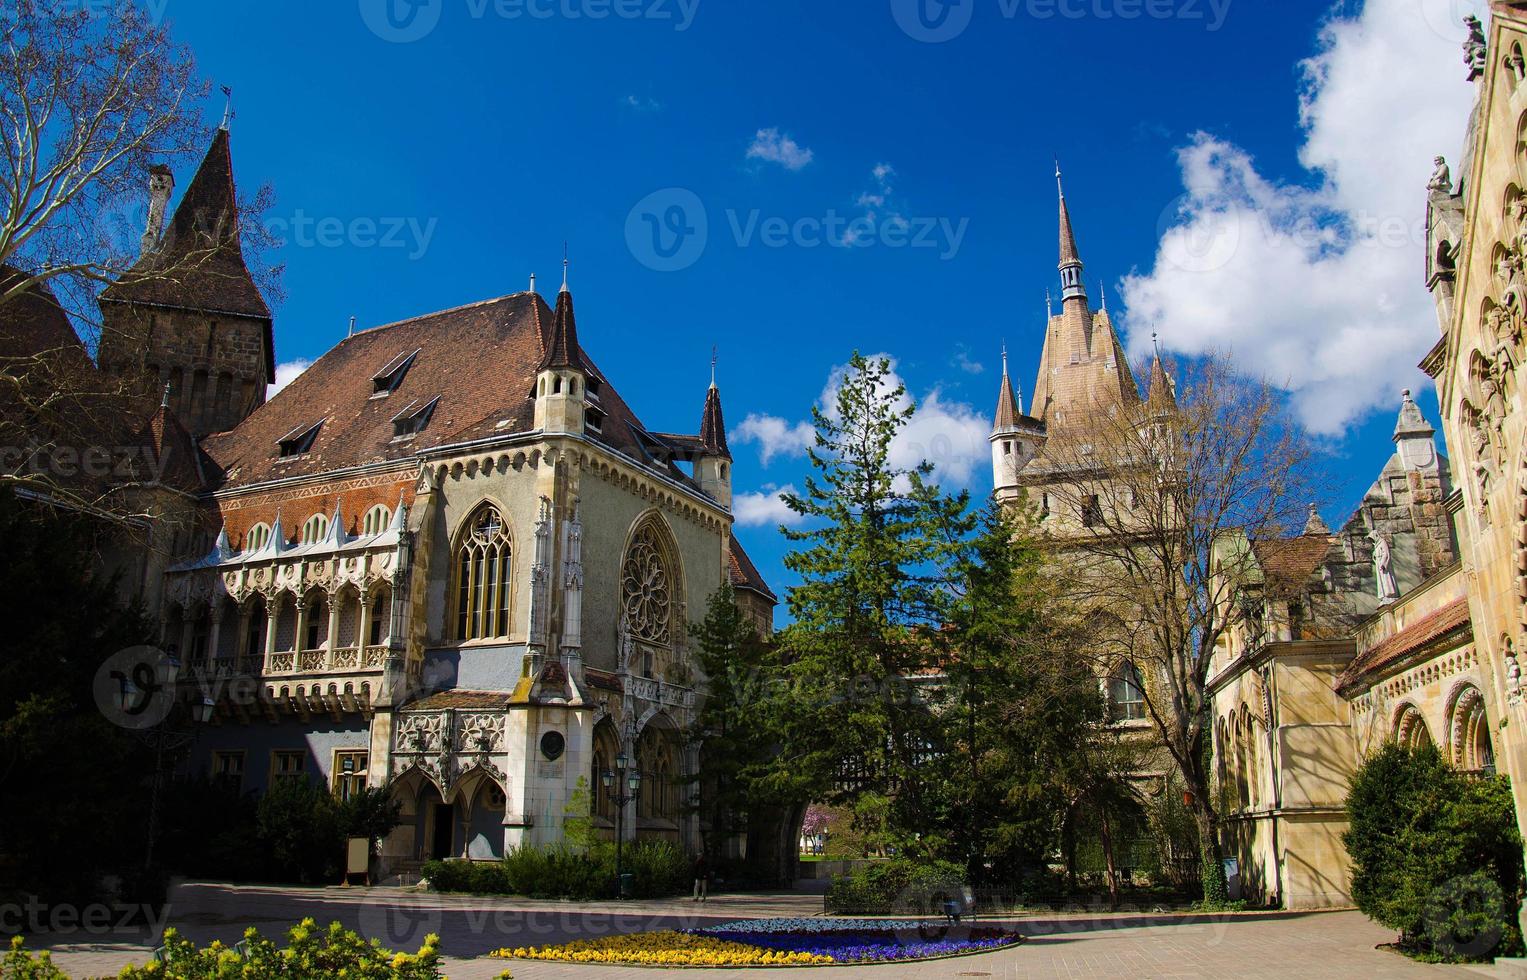 binnenplaats van vajdahunyad-kasteel in stadspark, boedapest, hongarije foto